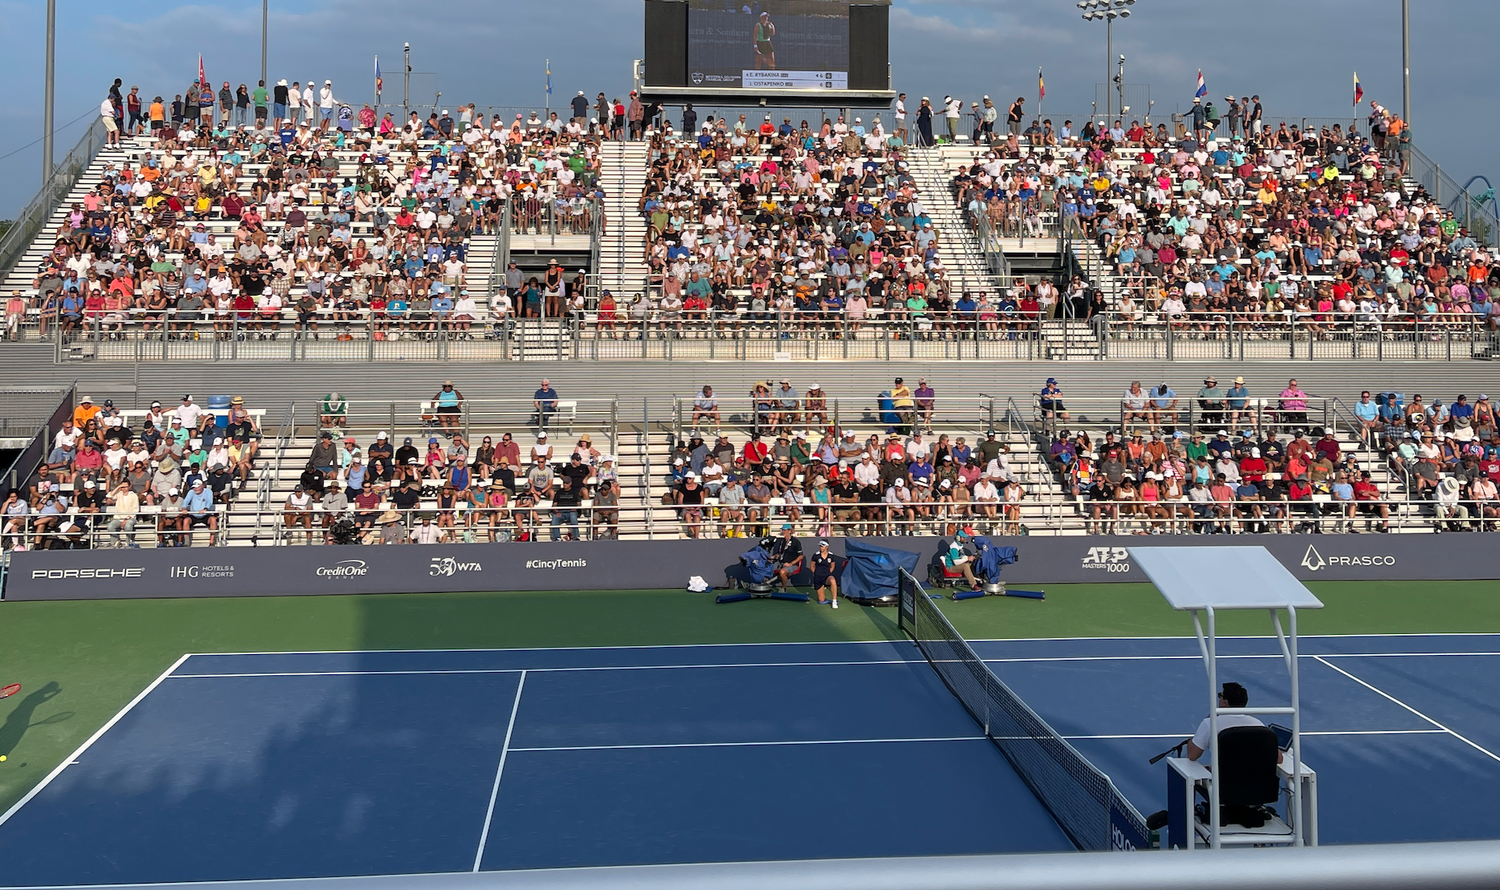 Professional Tennis Court